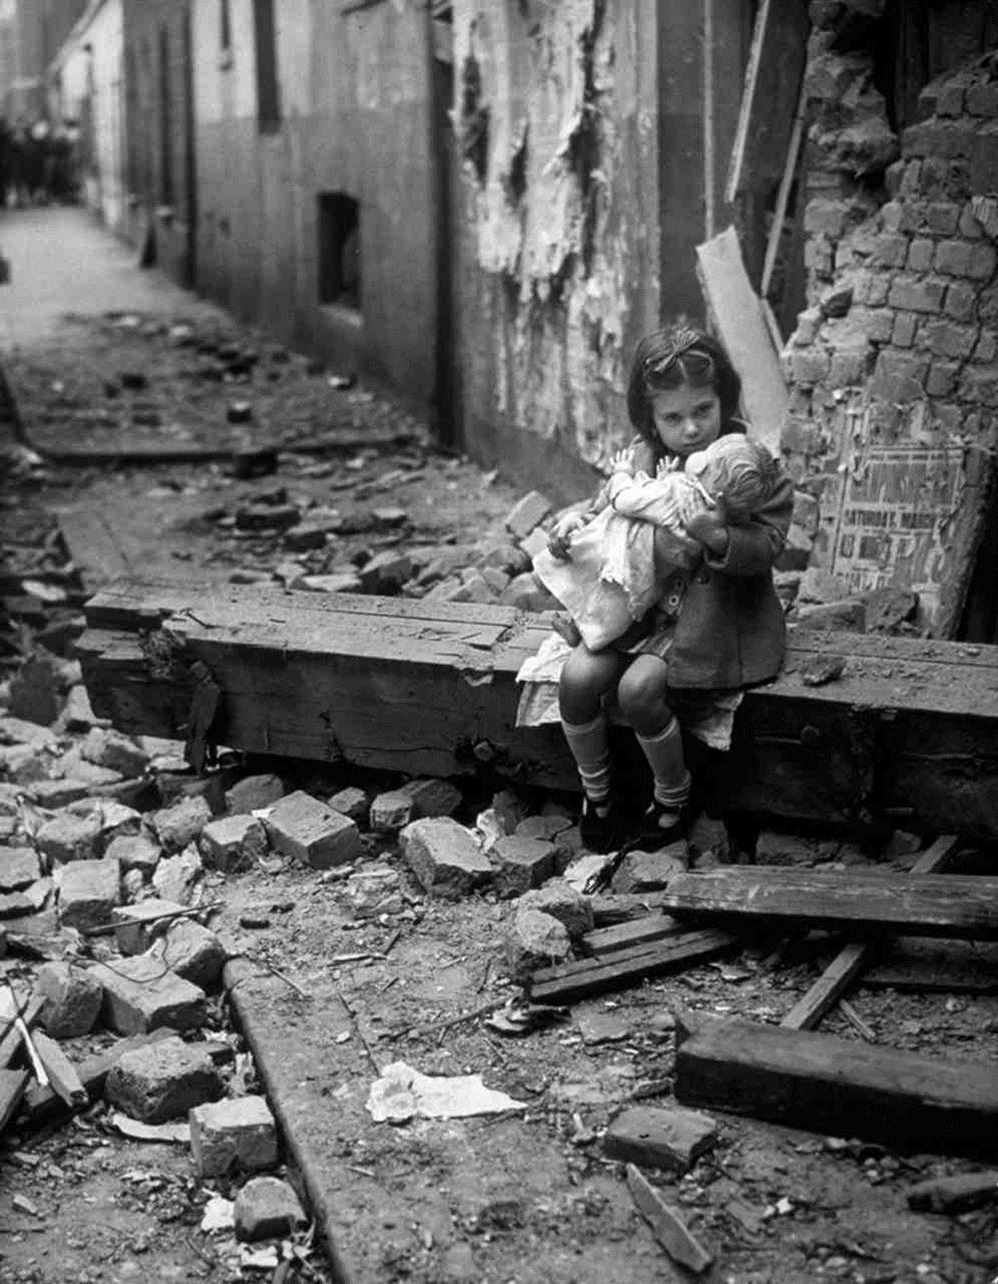 21. An English Girl near her bomb-damaged home 1940